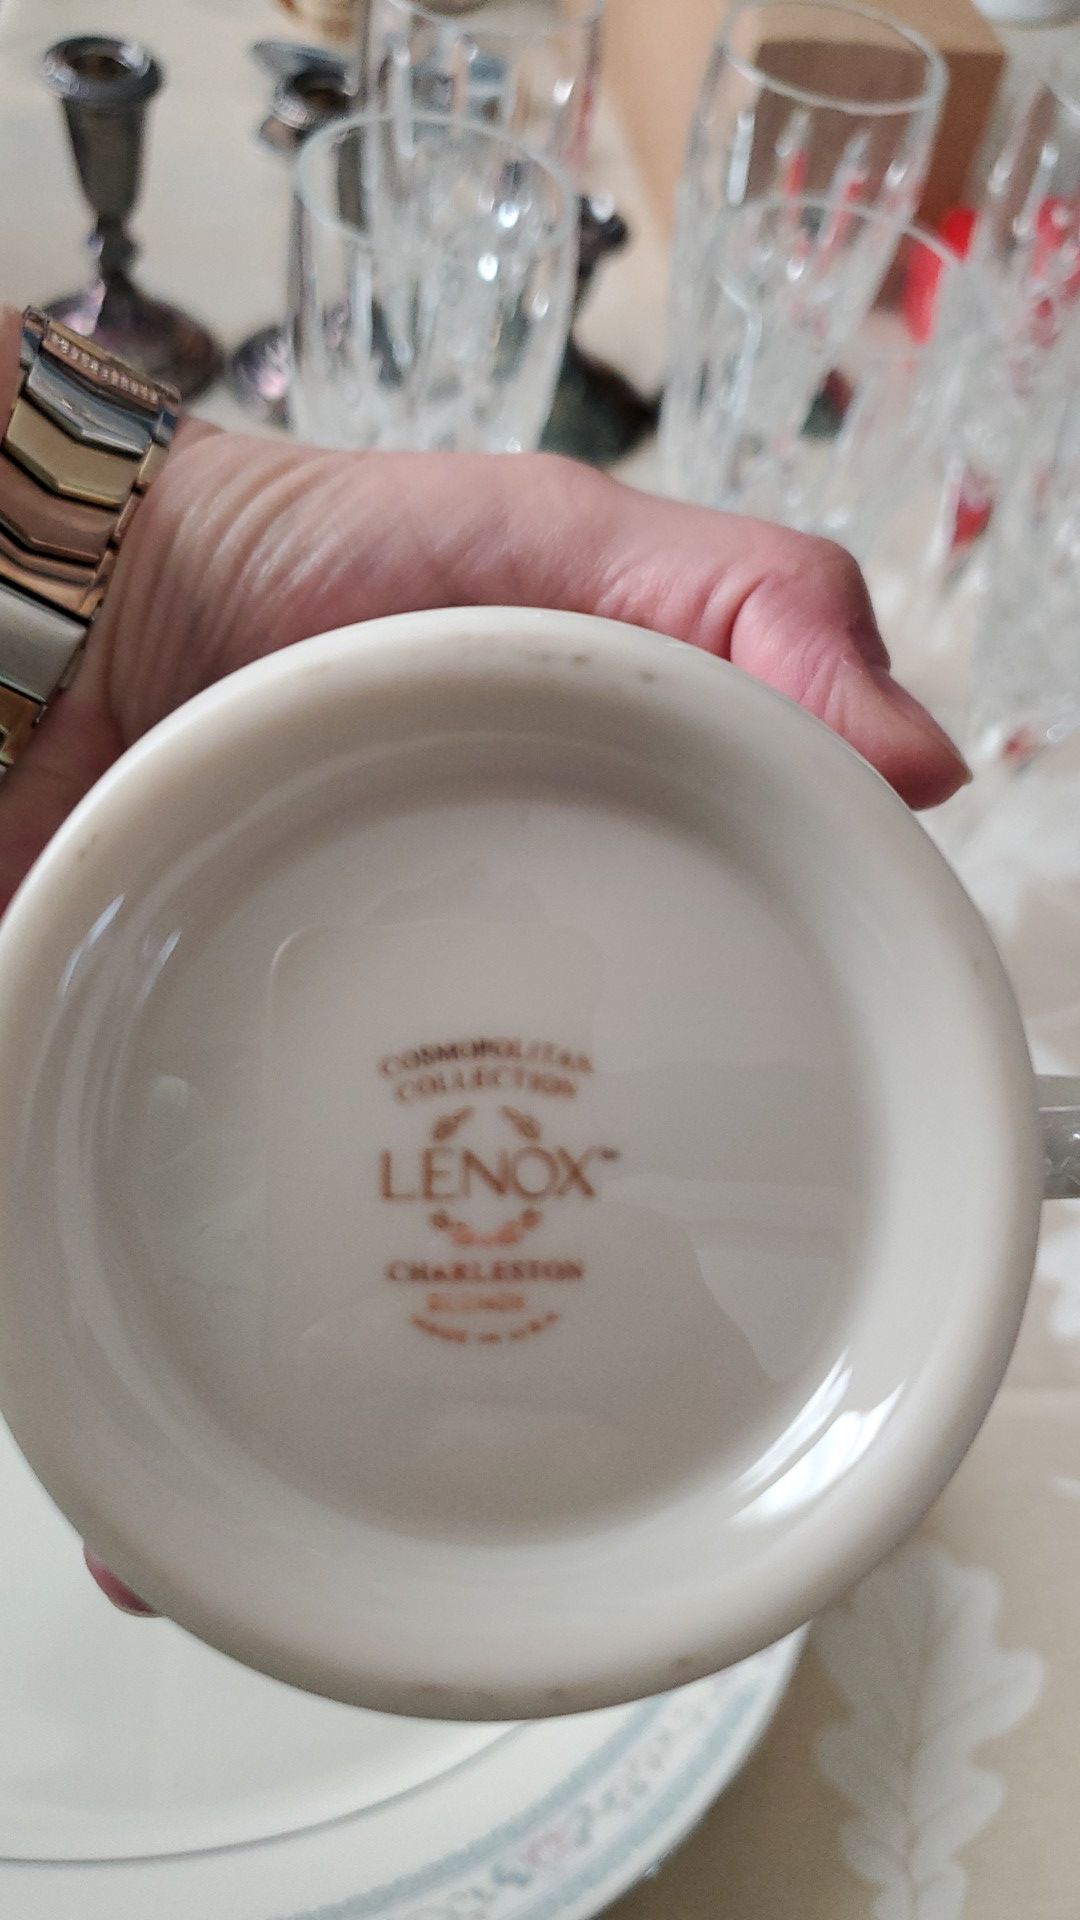 Lenox Charleston pattern sugar bowl and creamer